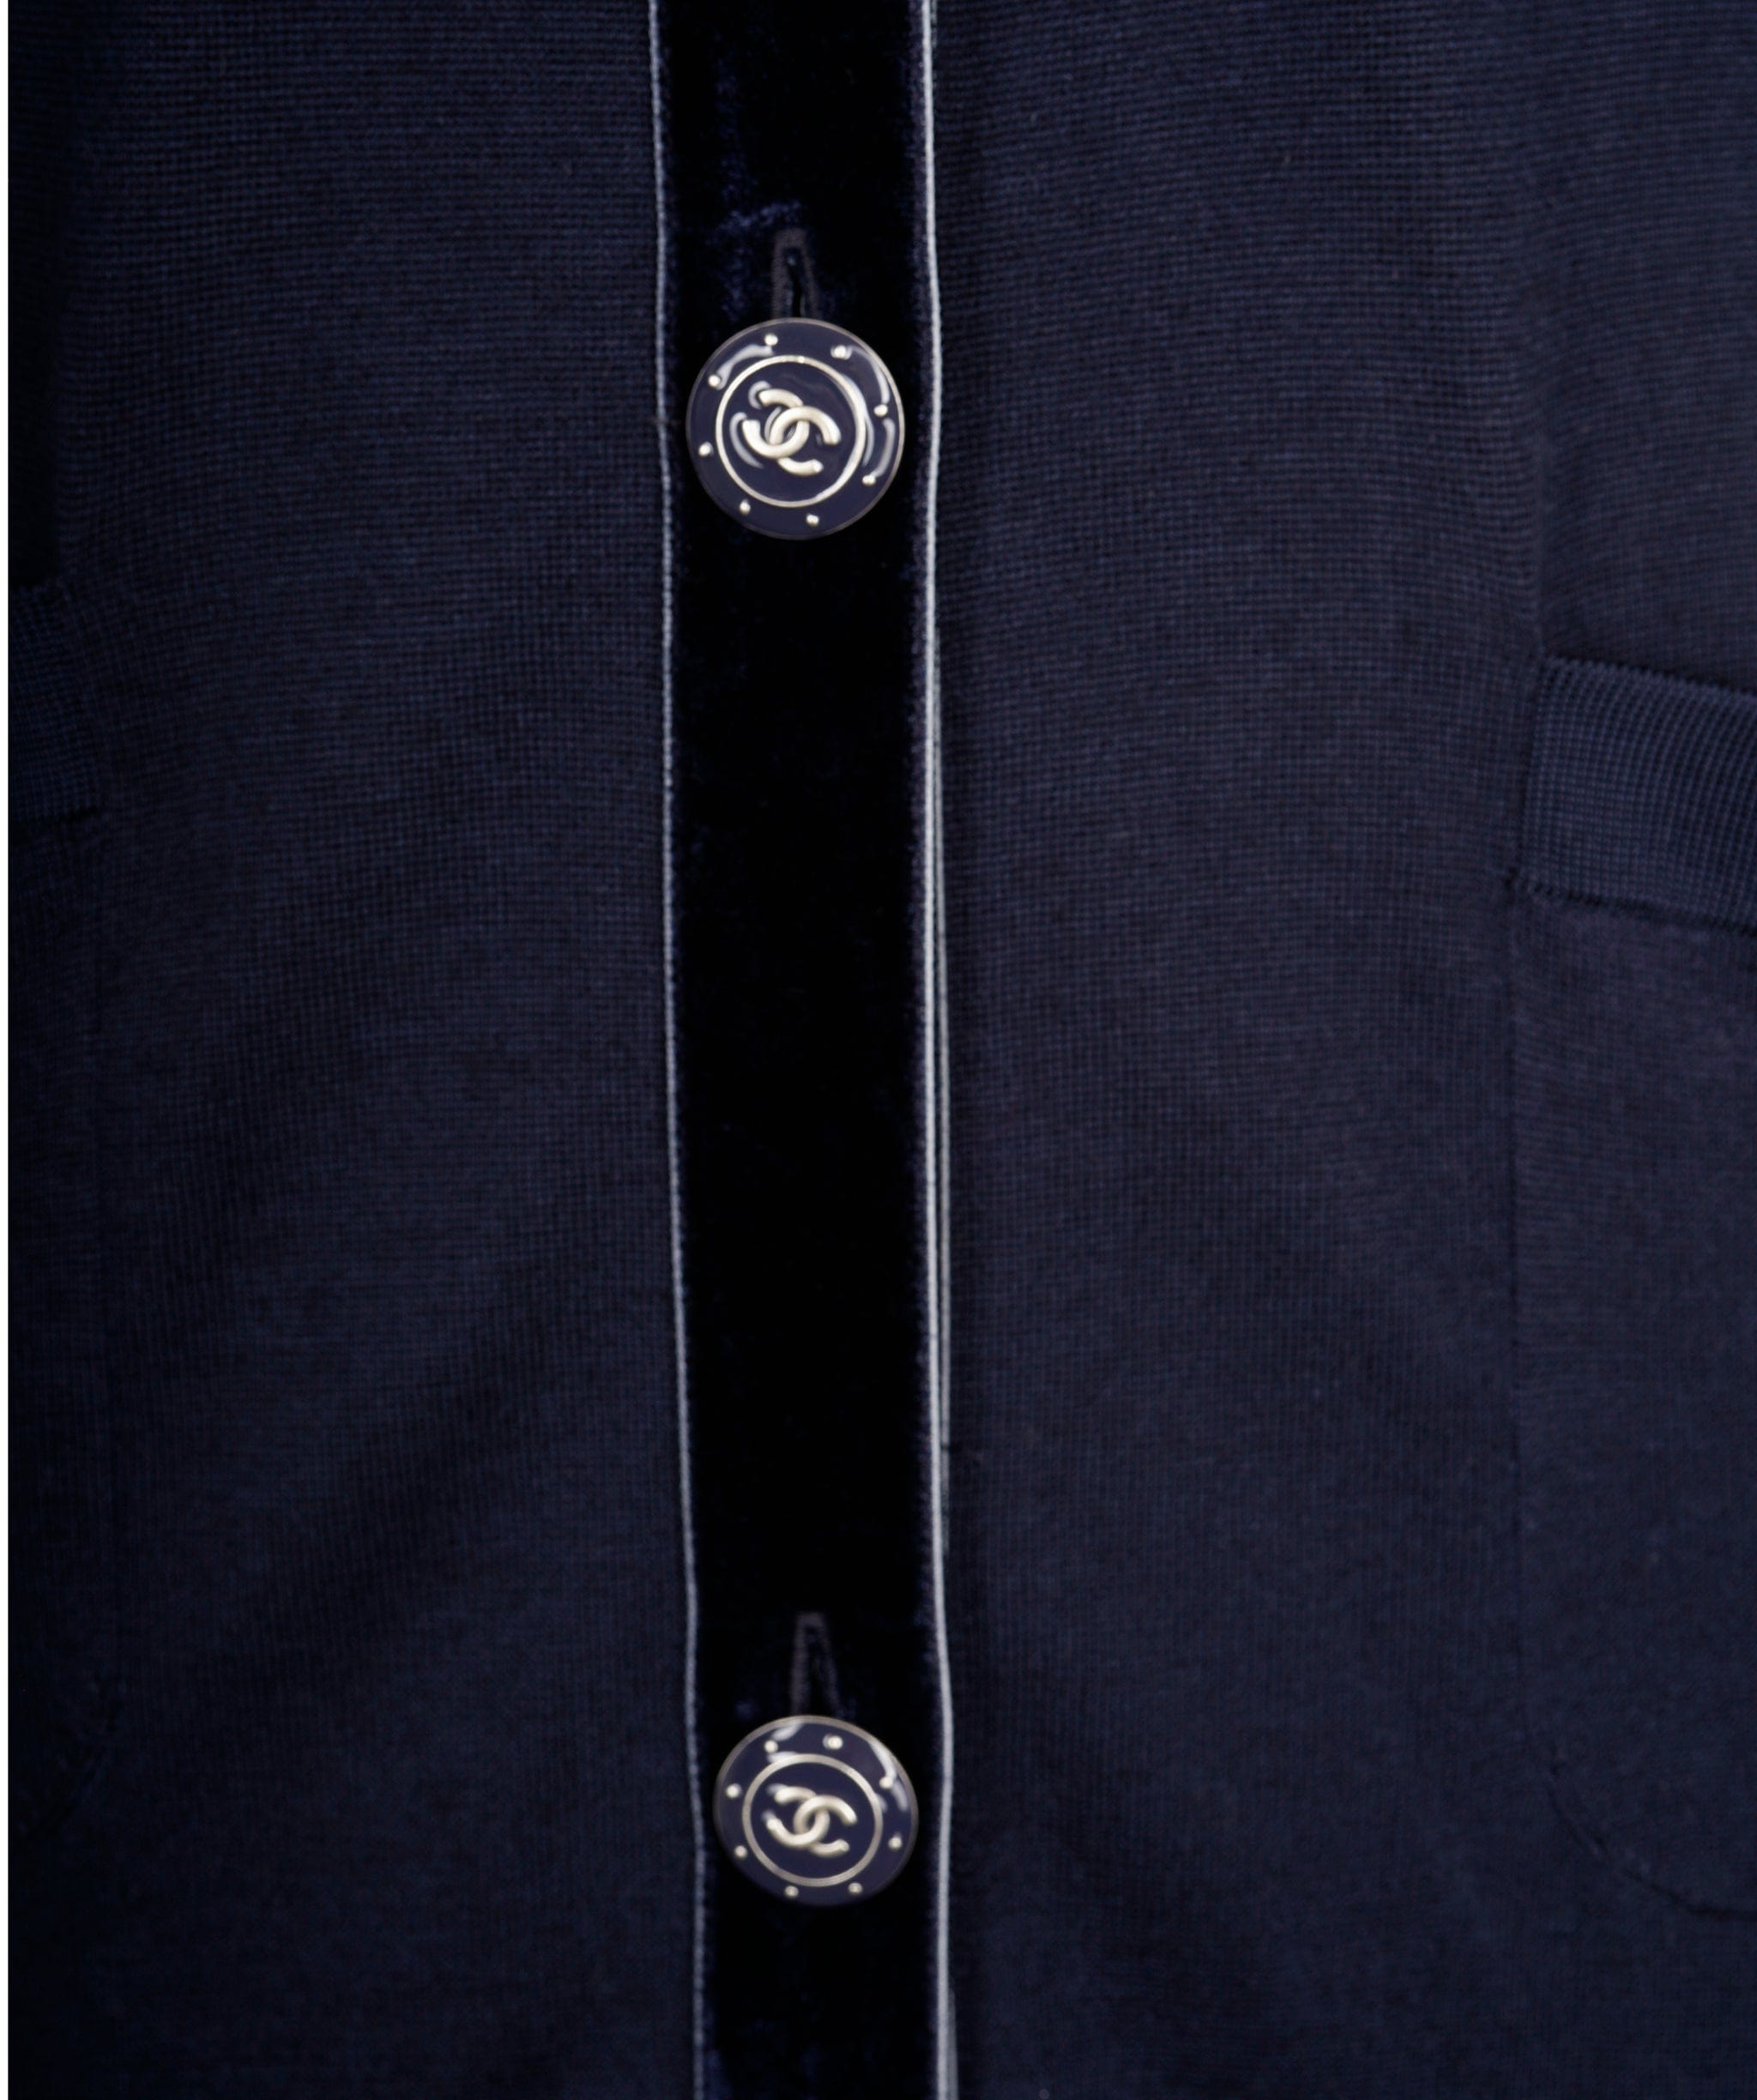 Chanel Chanel Midnight Blue Long CC Cardigan Dress Size 38 ALL0472